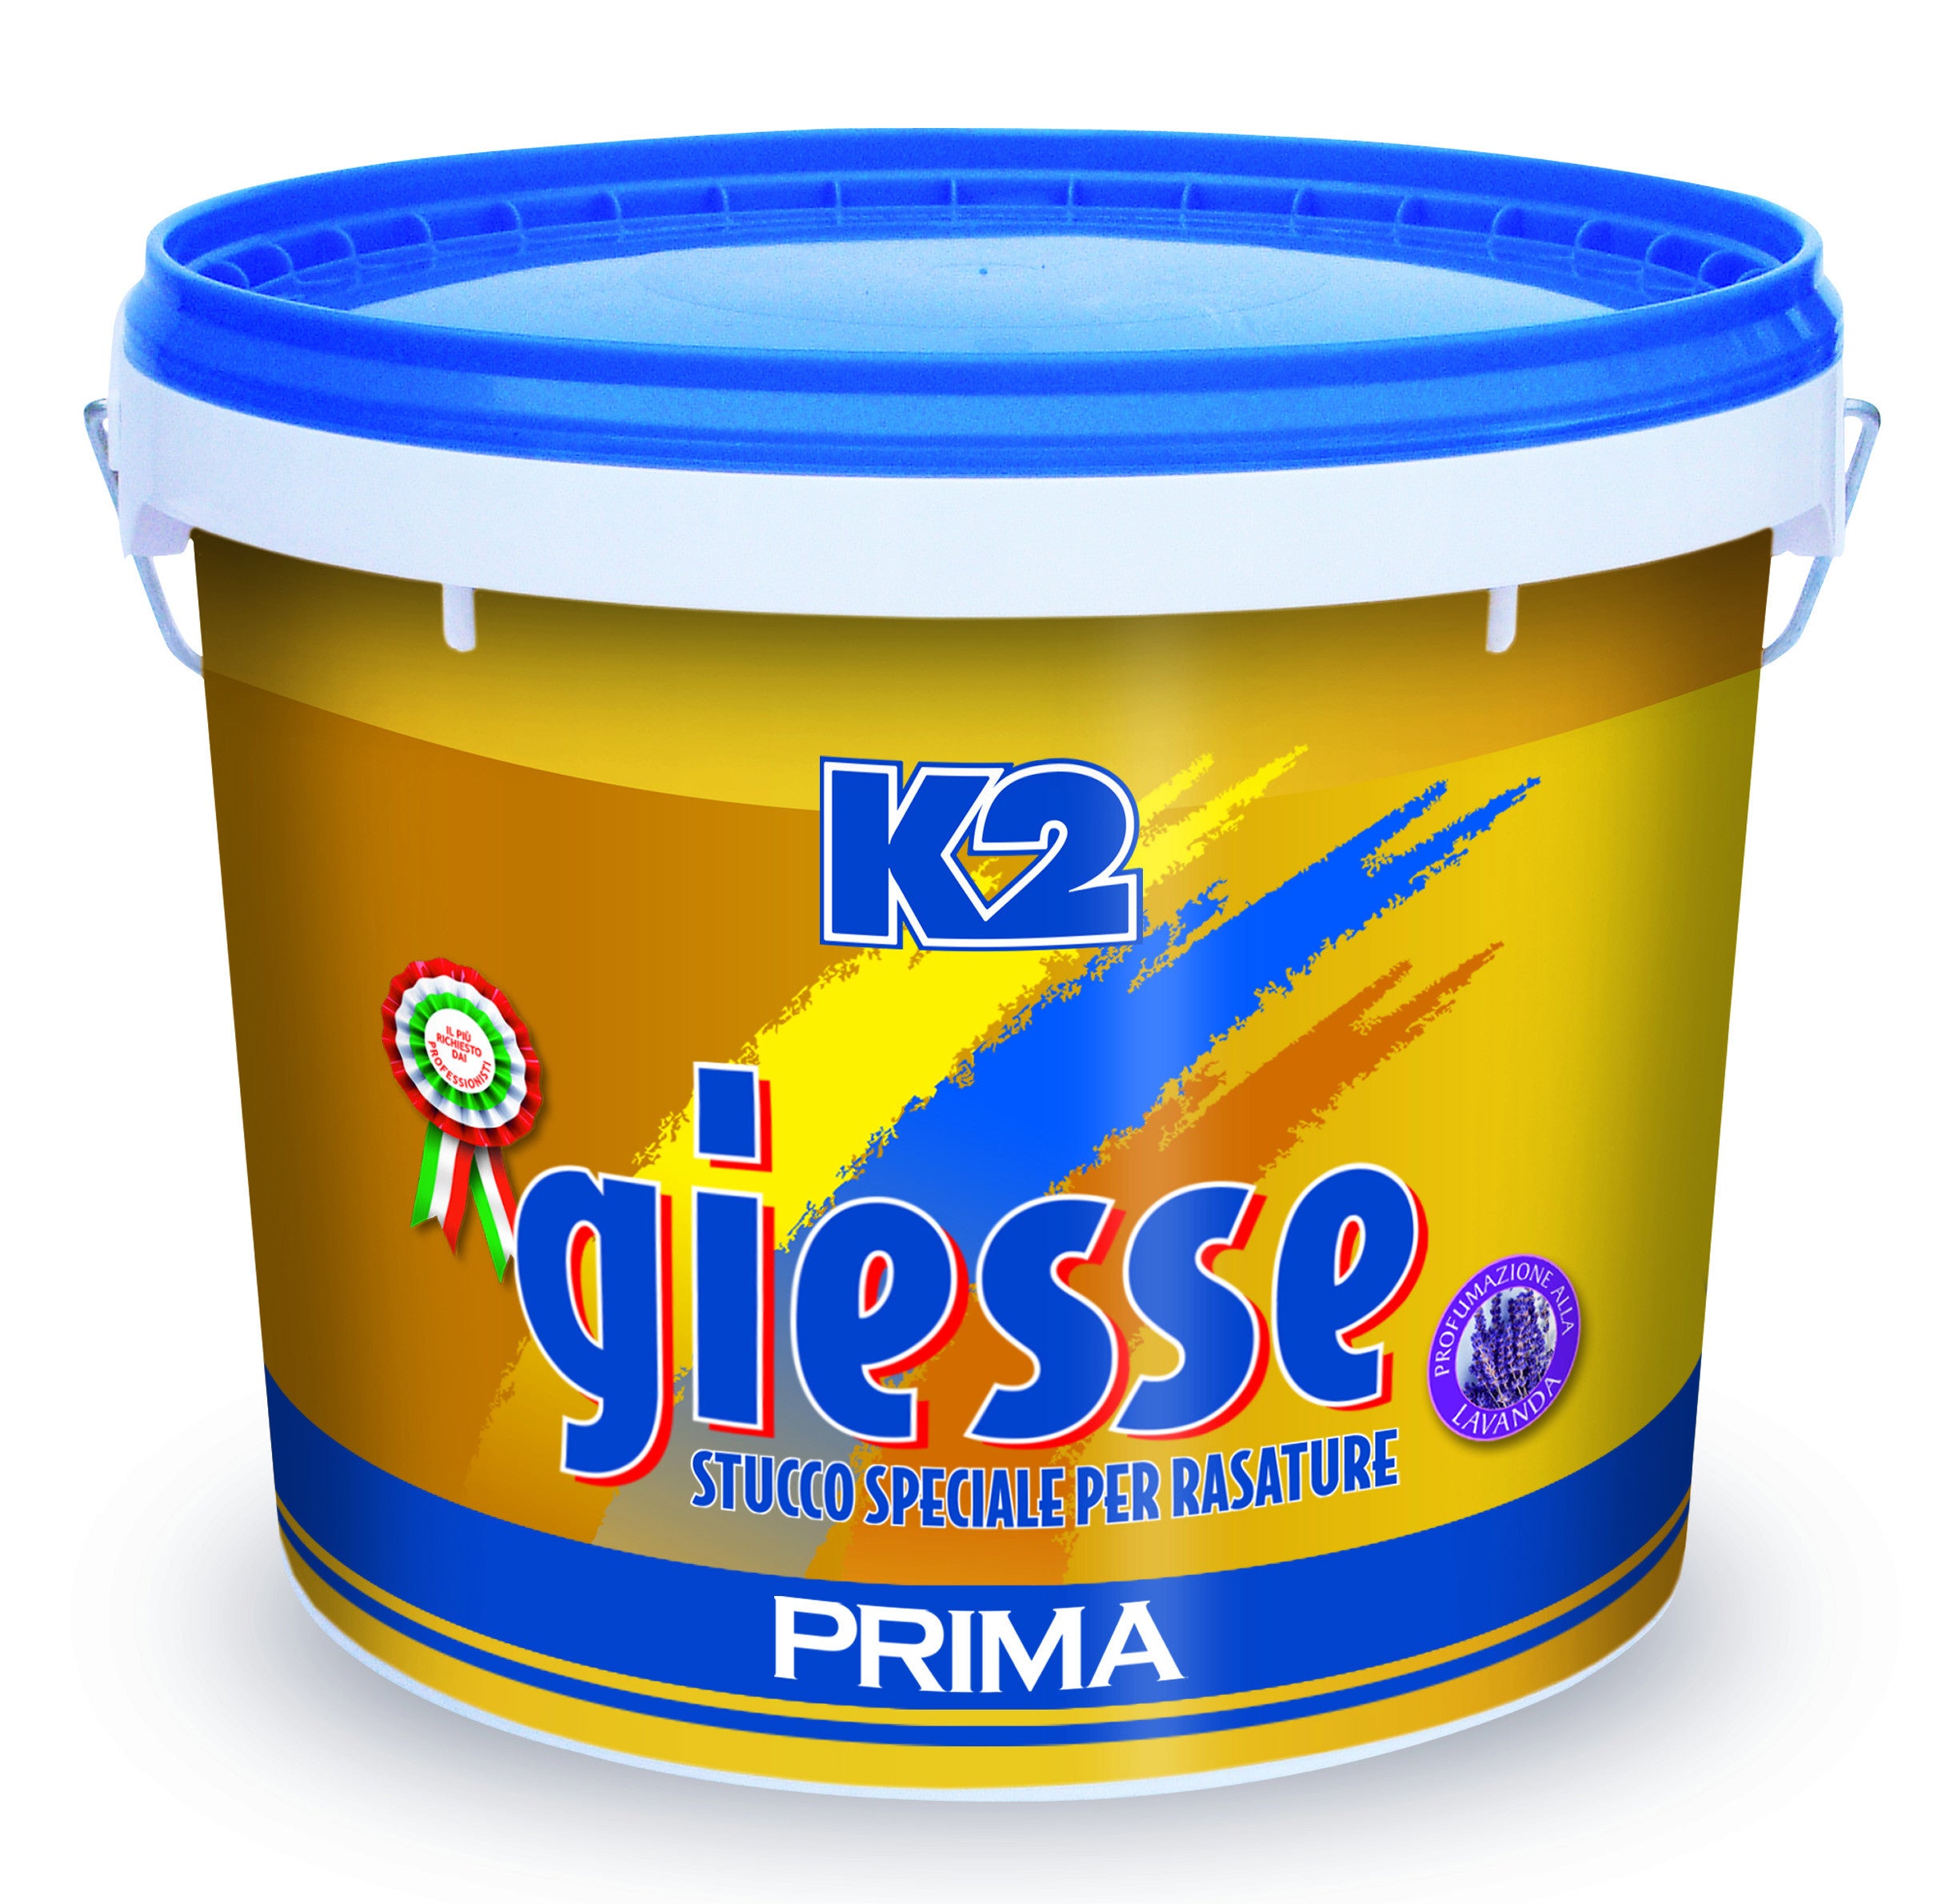 Stucco in pasta per rasature k2 gs kg.20